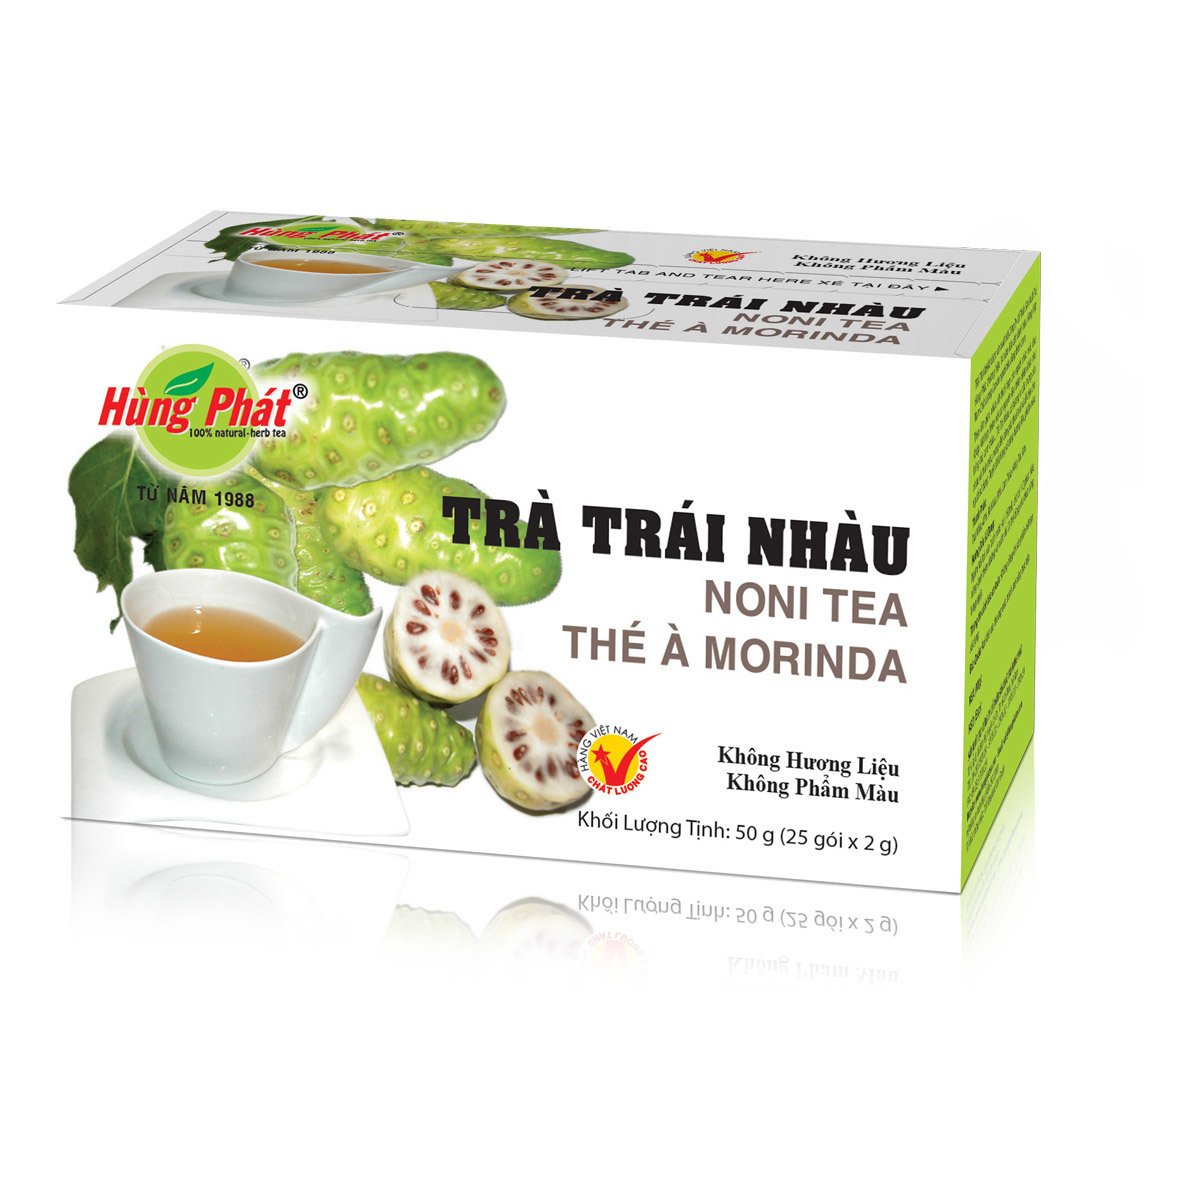 NONI TEA - HUNG PHAT TEA CORPORATION